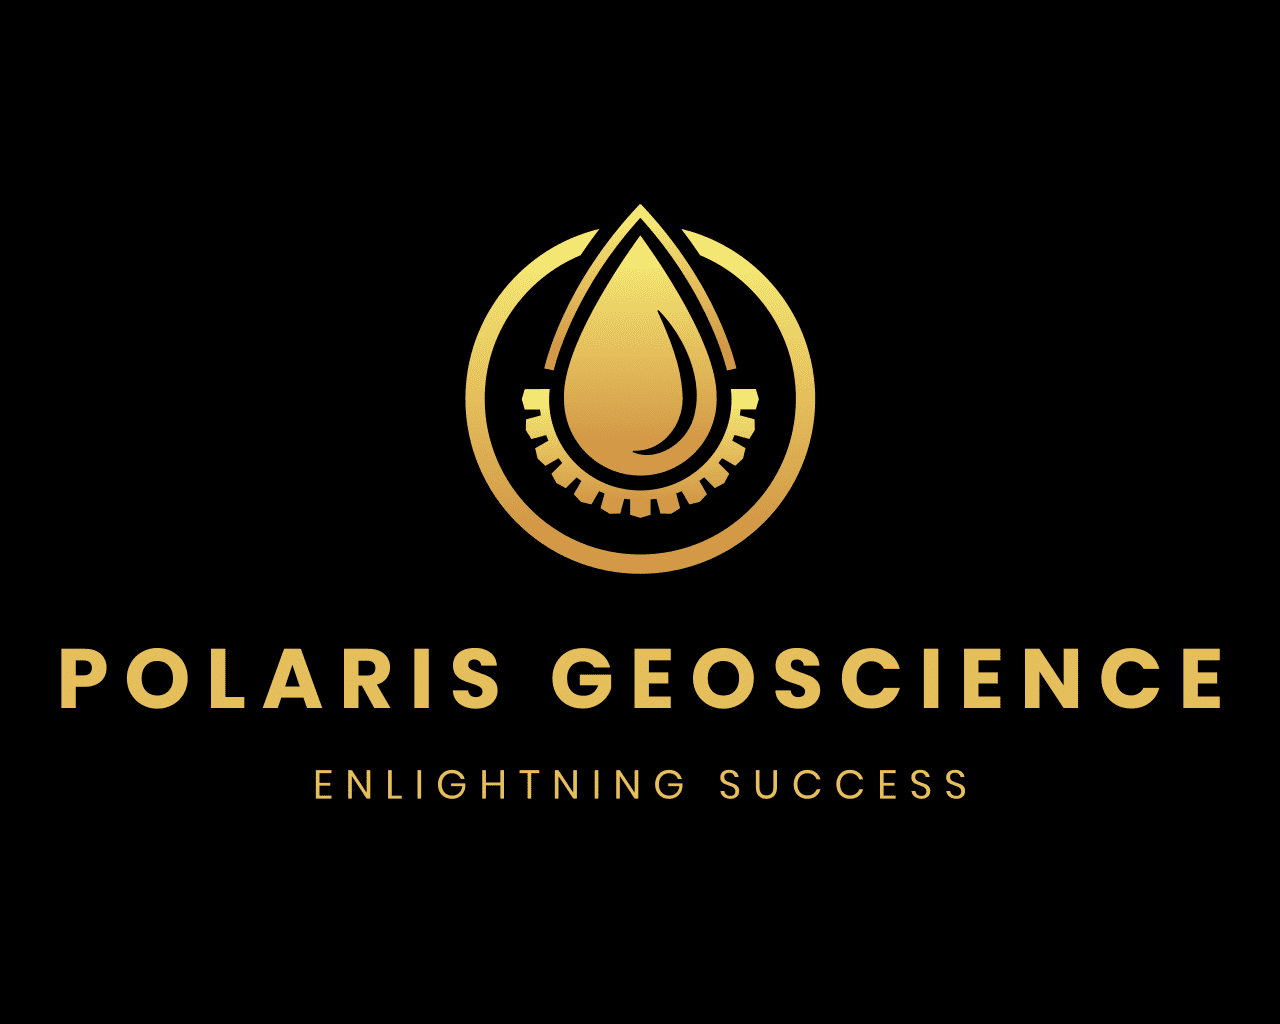 A gold logo that says polaris geoscience.